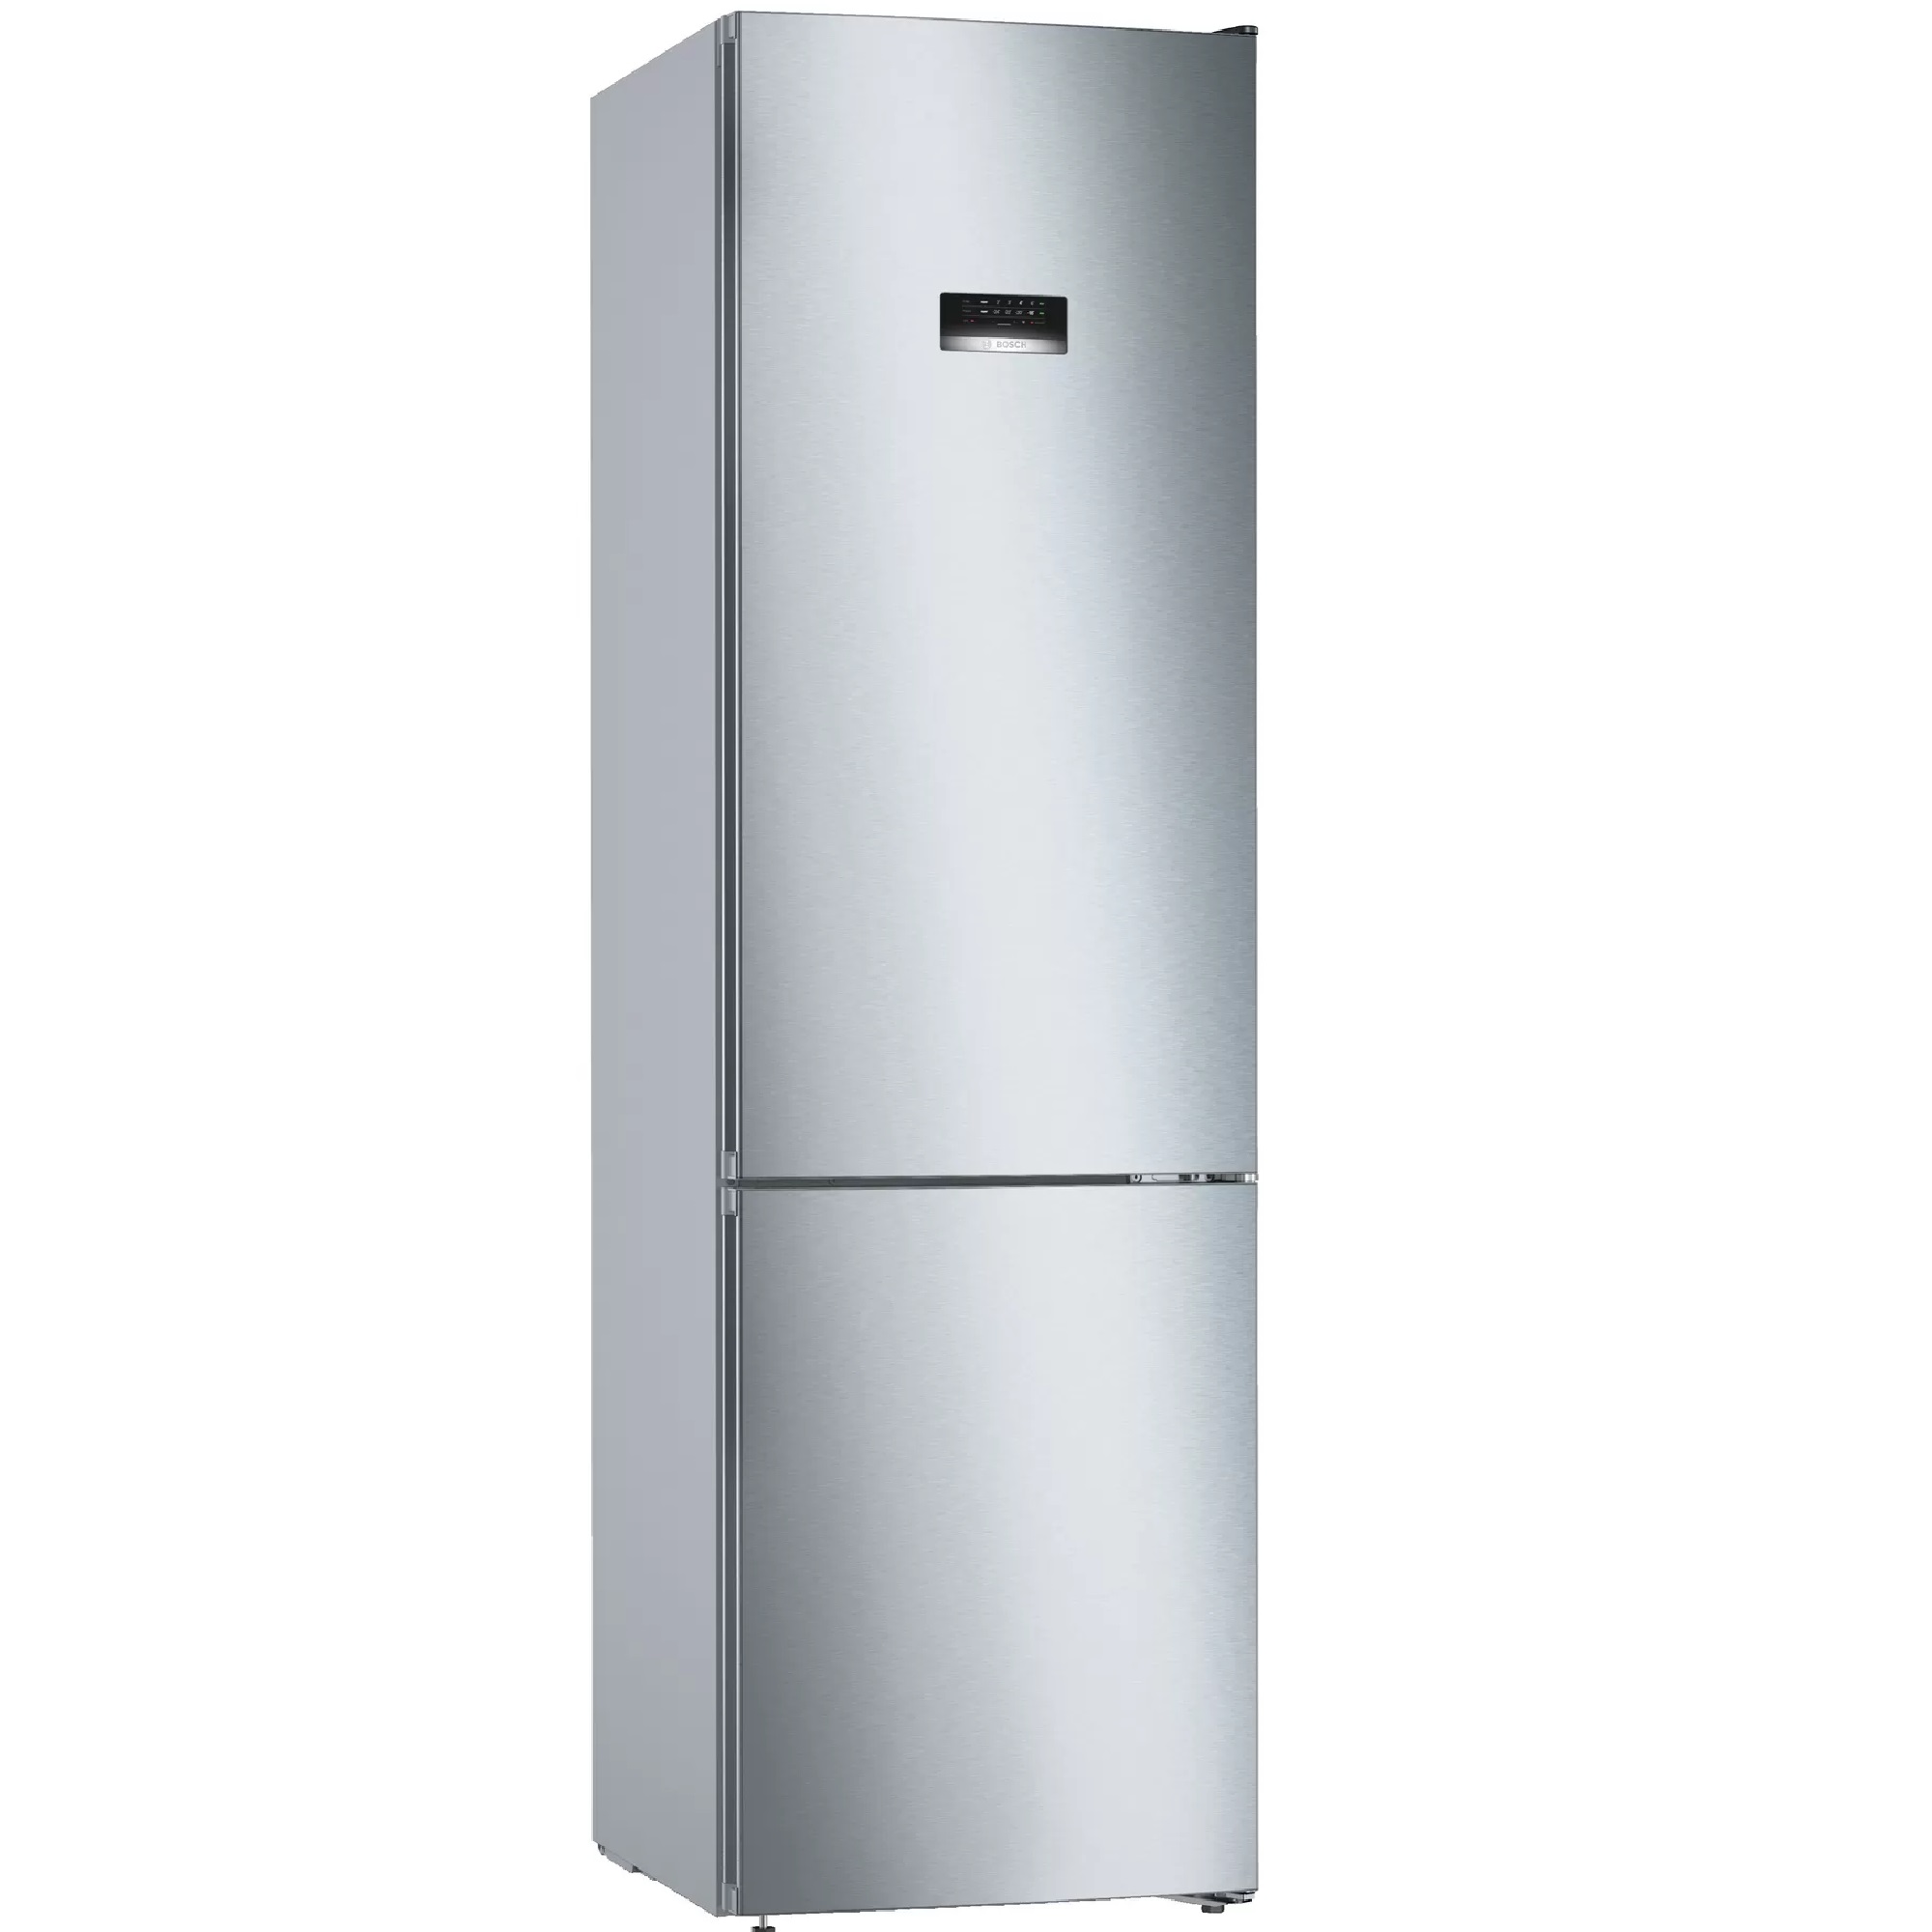 Эльдорадо купить холодильник недорогой. Bosch kgn39vi21r. Холодильник Bosch KGN 49sm2. Холодильник Bosch kgn39xi28r. Холодильник Bosch kgv36nl1ar.